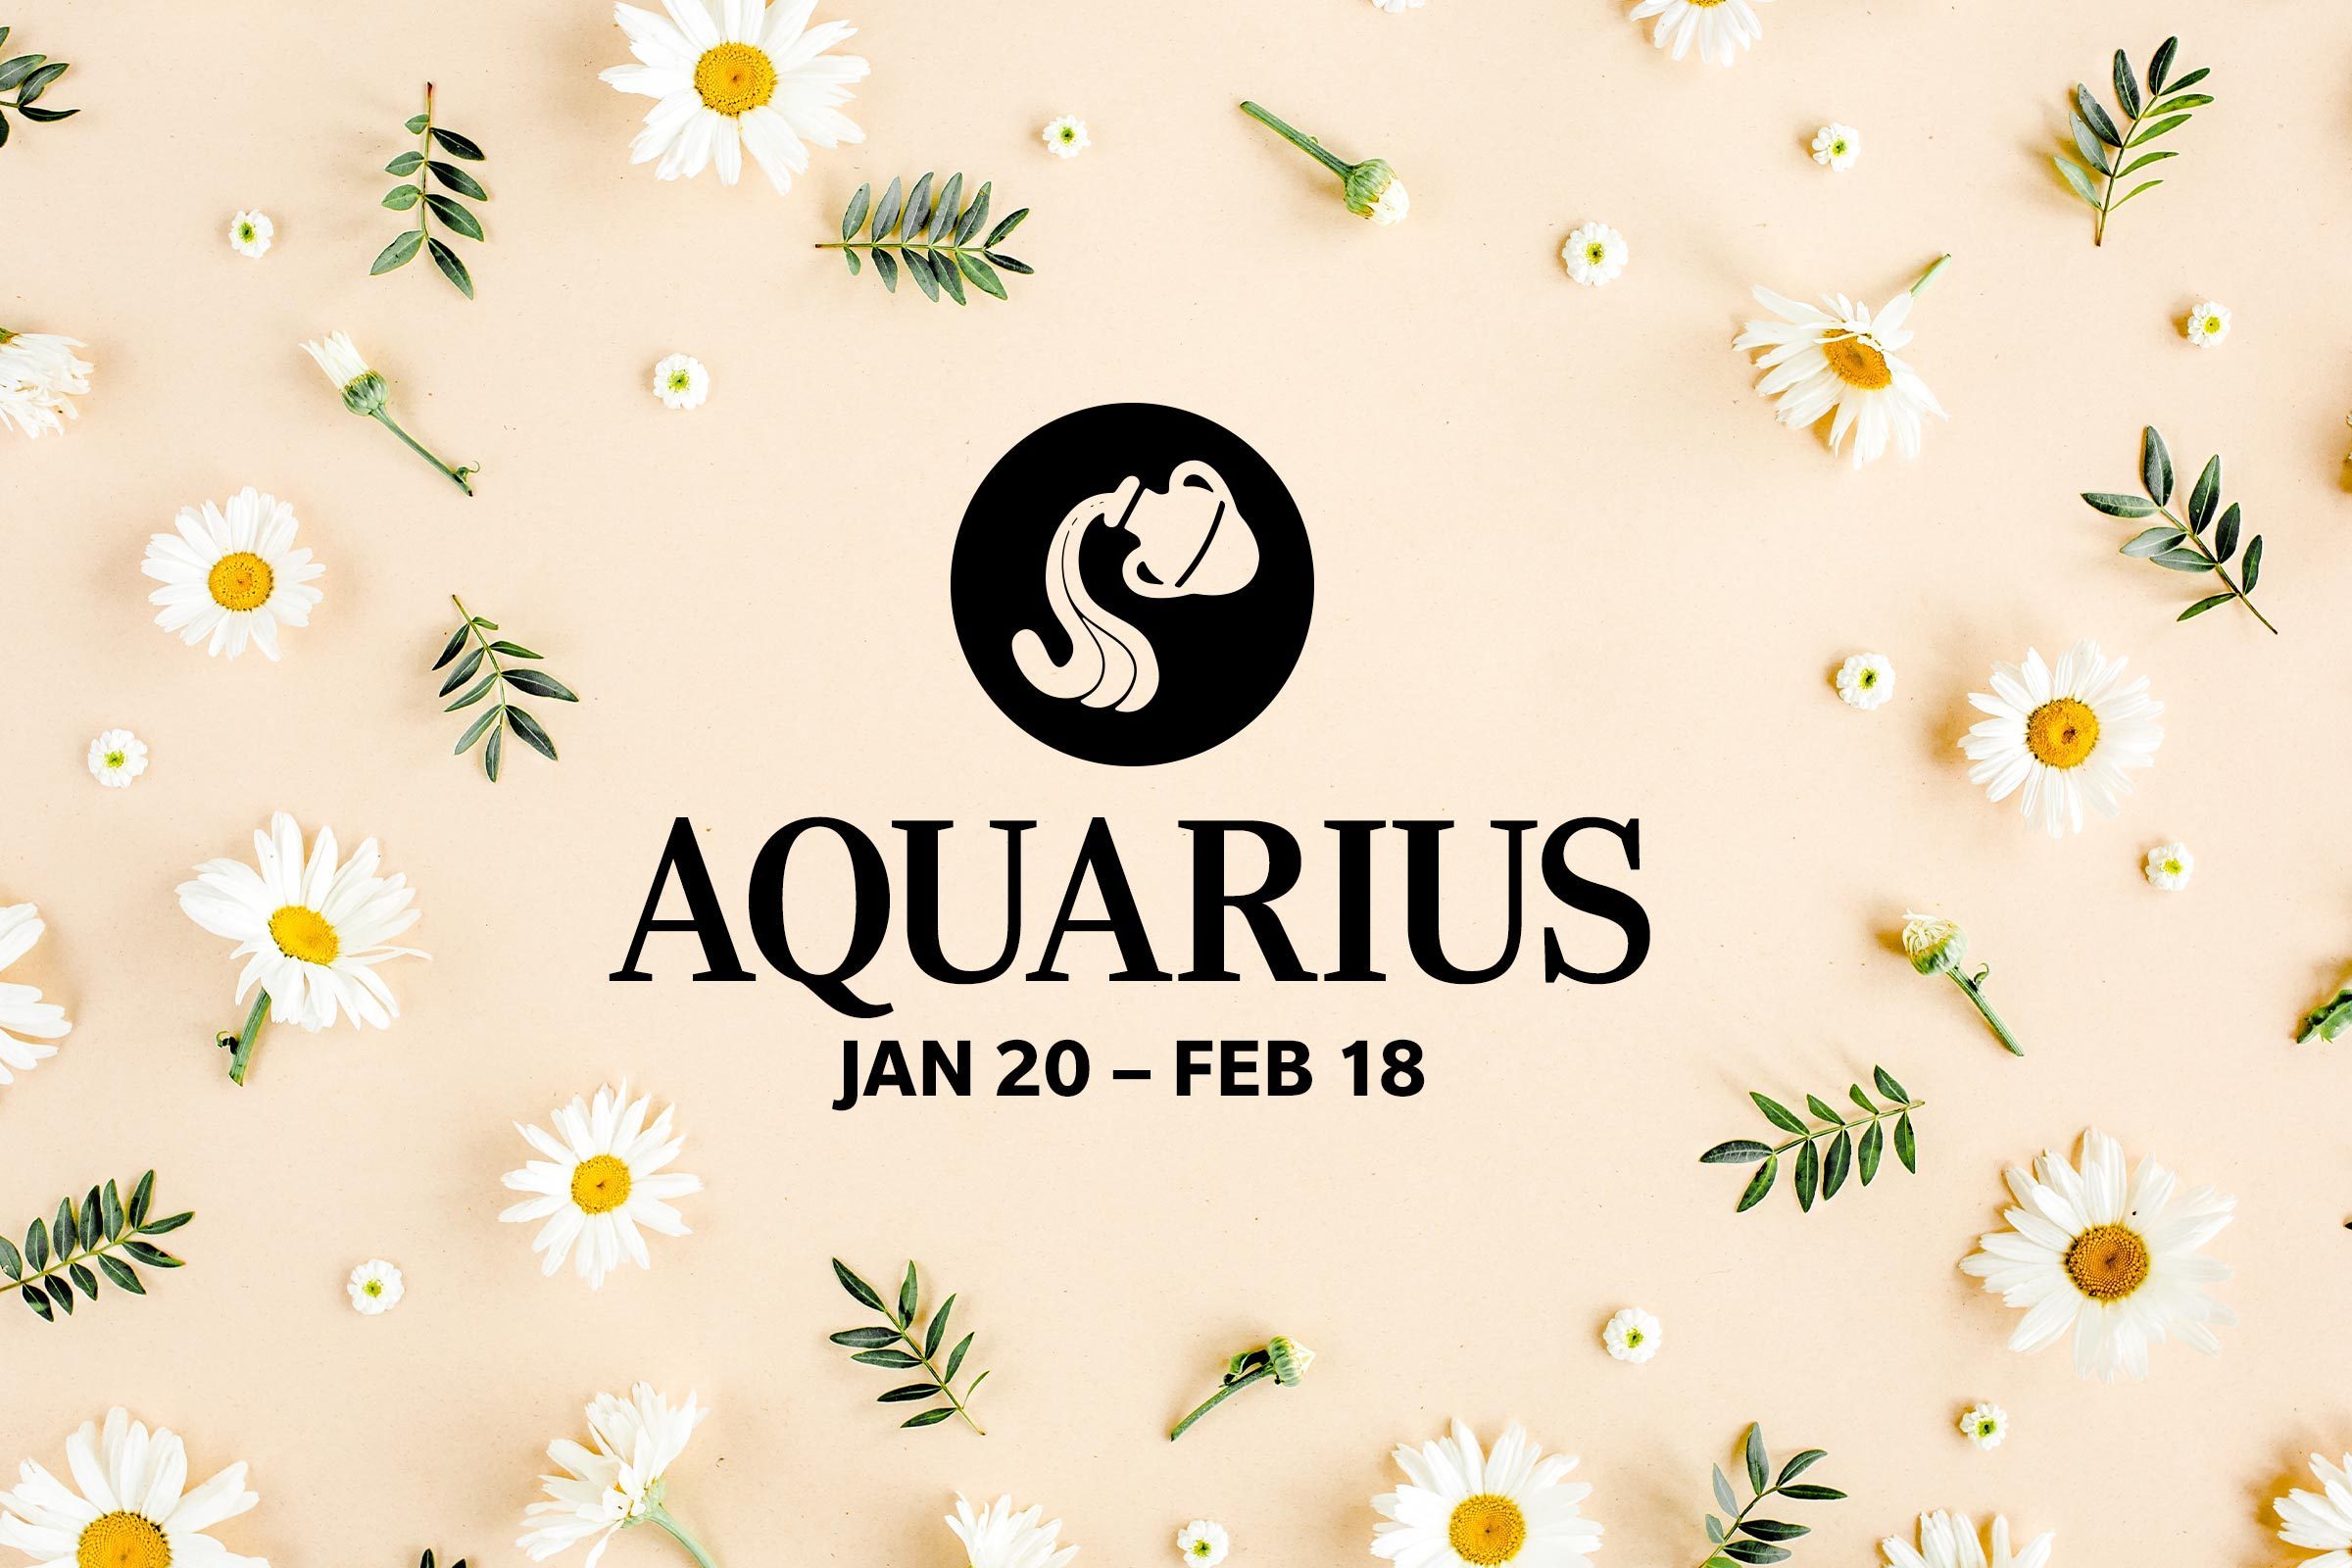 Aquarius (January 20-February 18)